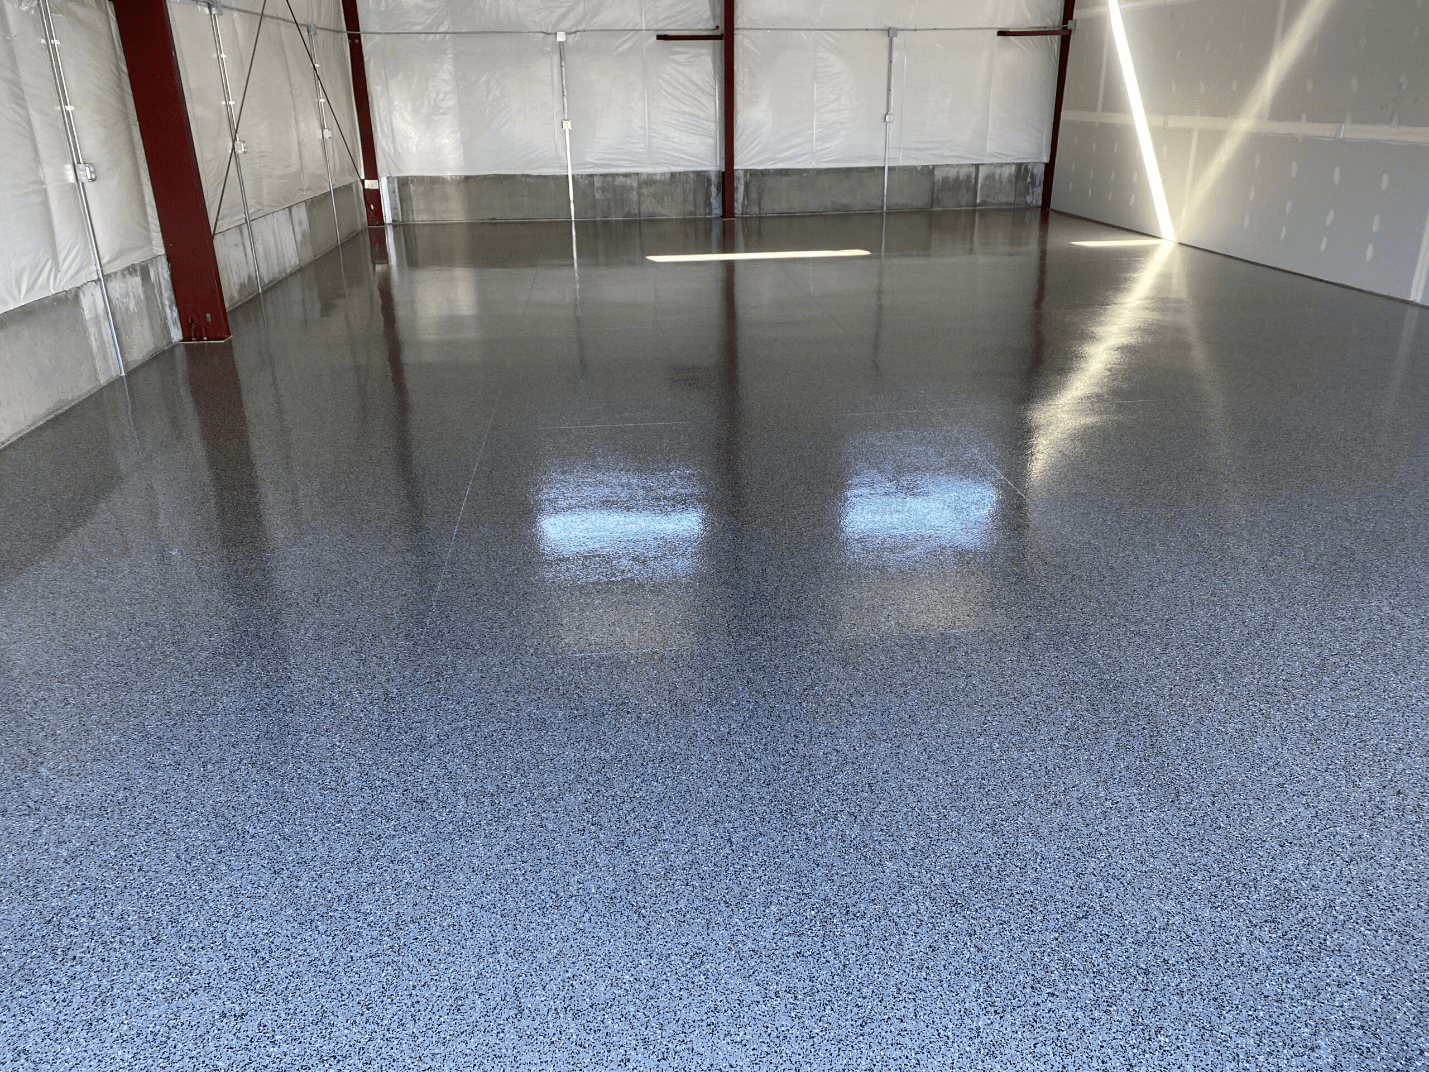 An epoxy-coated garage floor